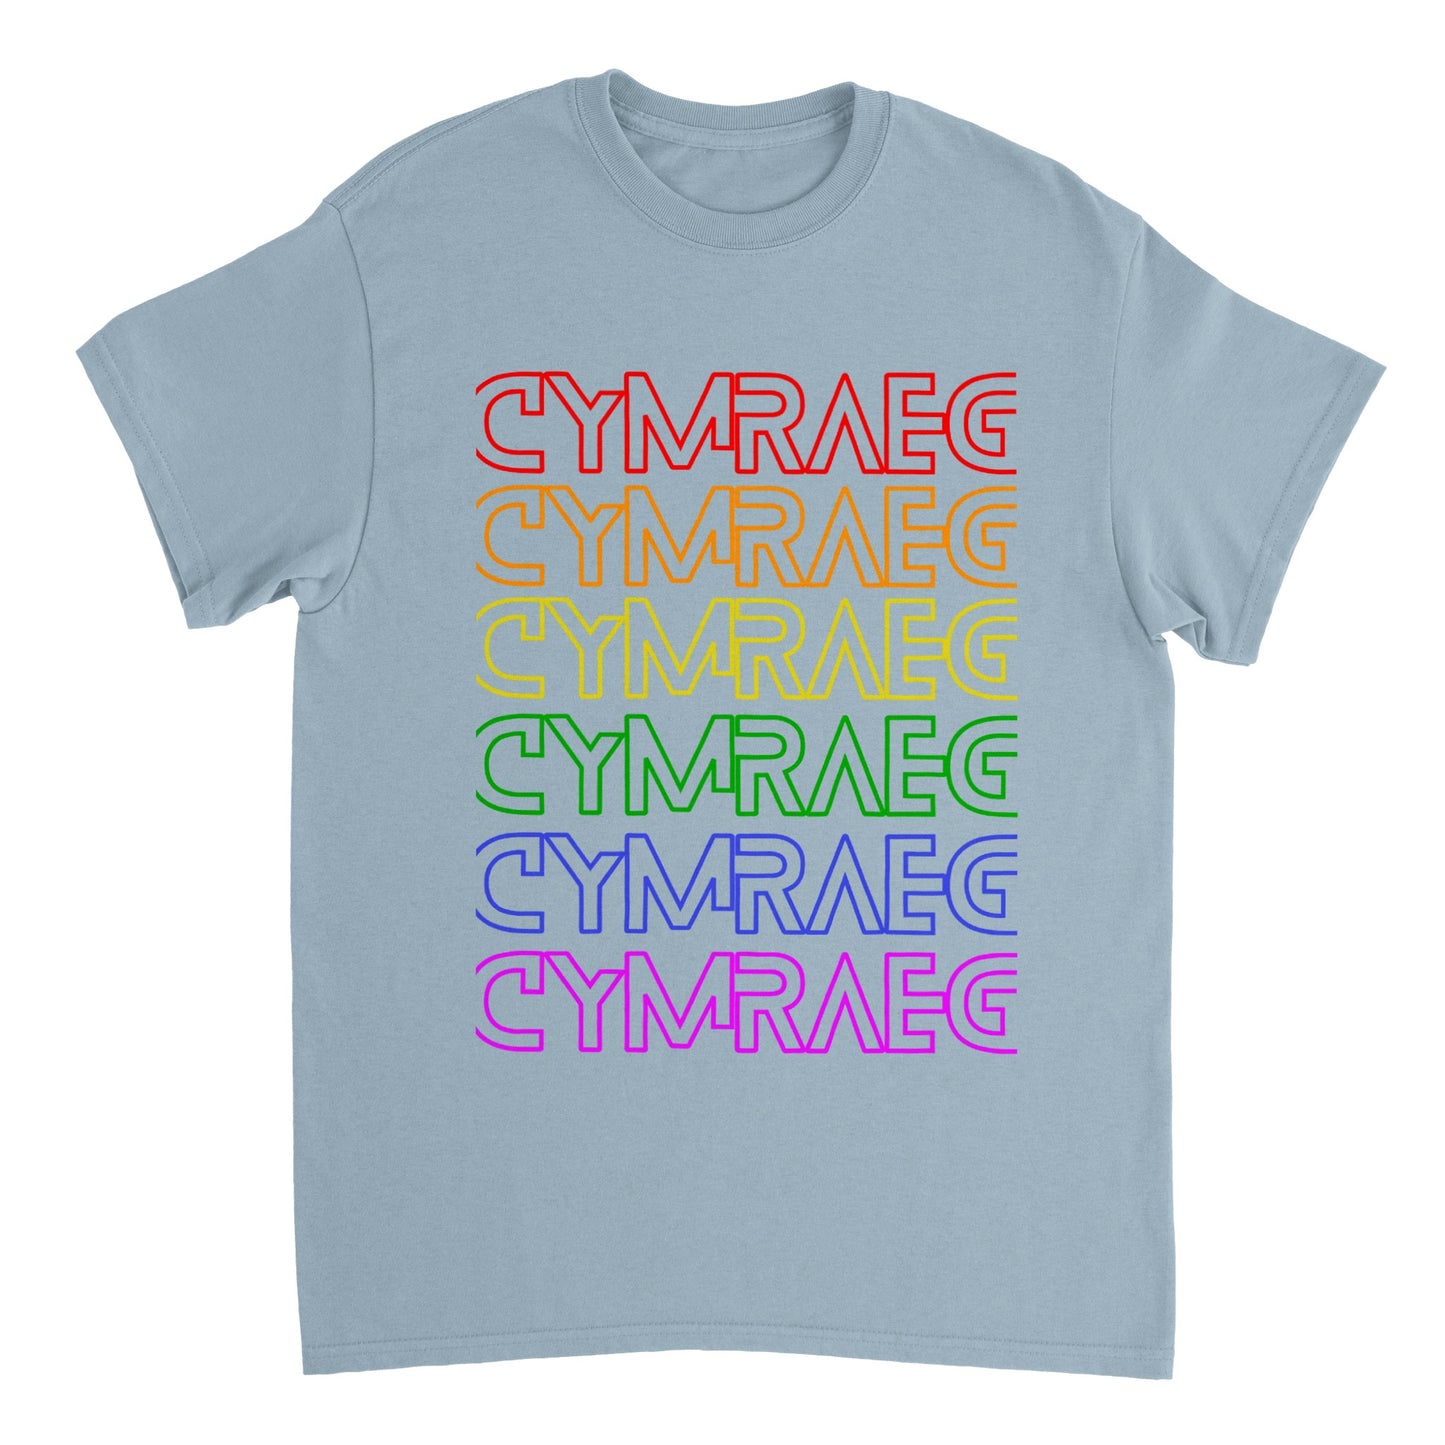 Cymraeg Pride - Heavyweight Unisex Crewneck T-shirt